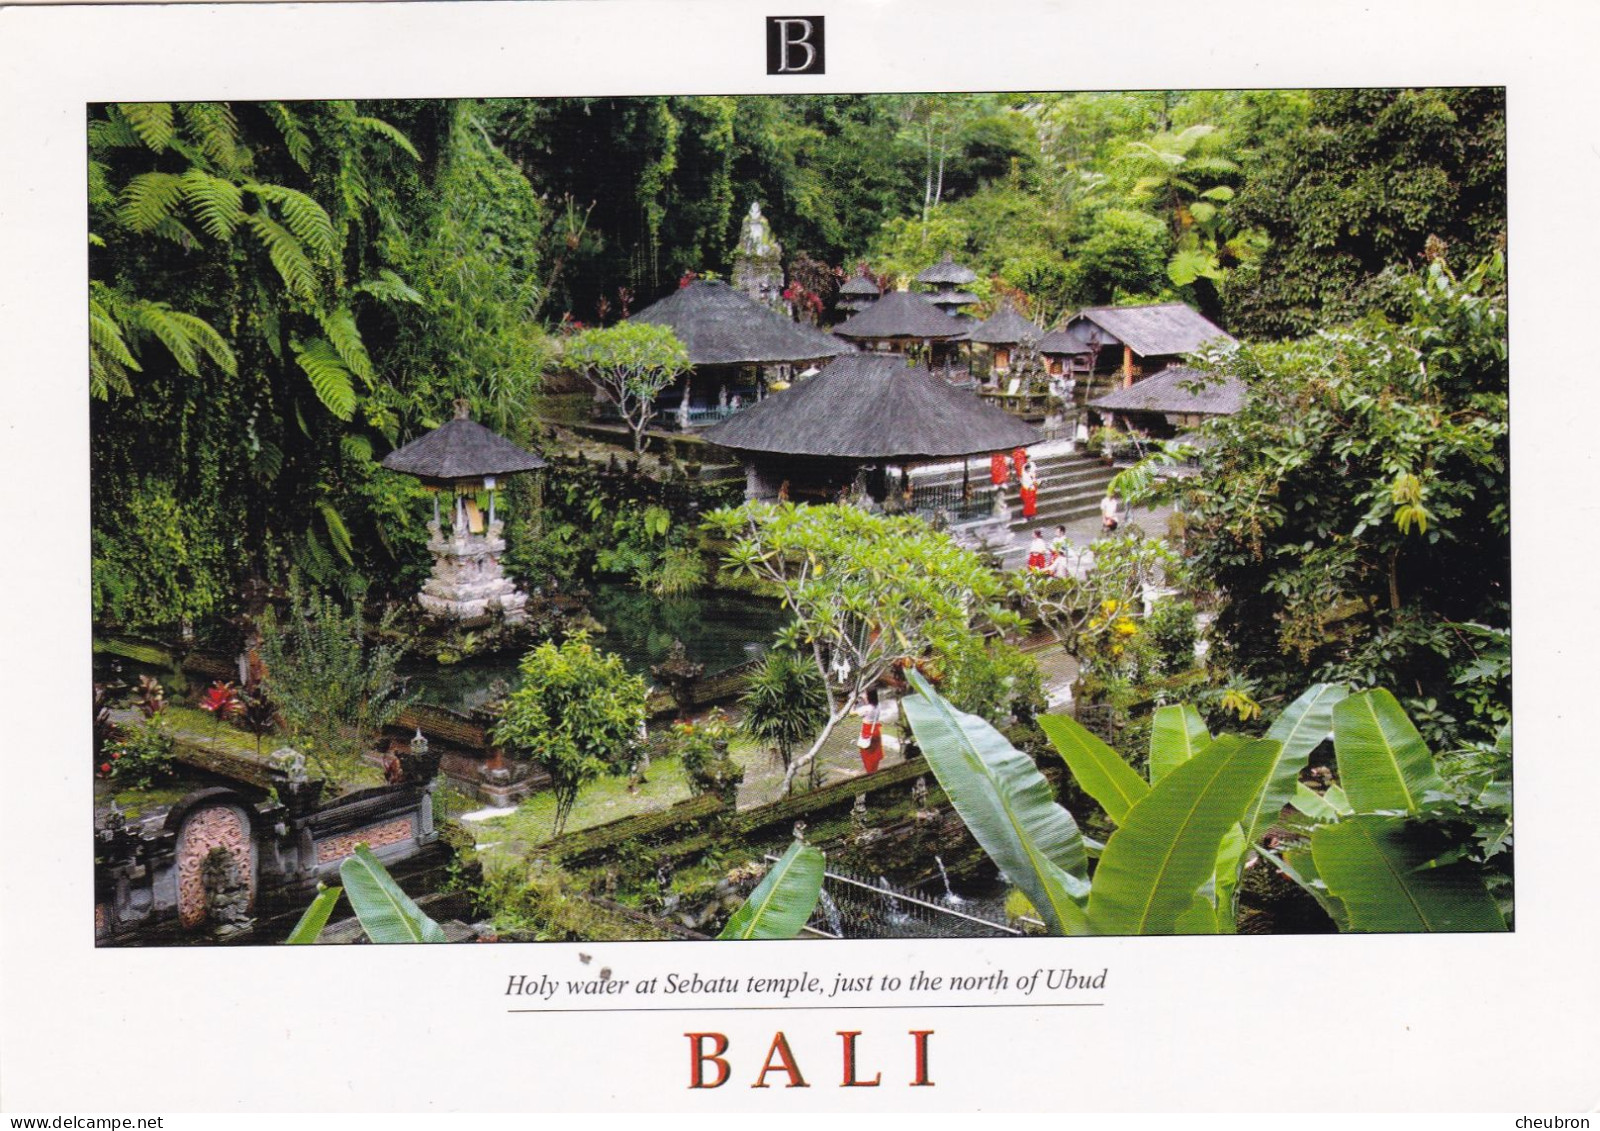 INDONESIE. BALI (ENVOYE DE). " HOLI WATER  AT SEBATU TEMPLE  ".ANNEE 2009 + TEXTE + TIMBRES. FORMAT 16.5x11.5 Cm - Indonesien